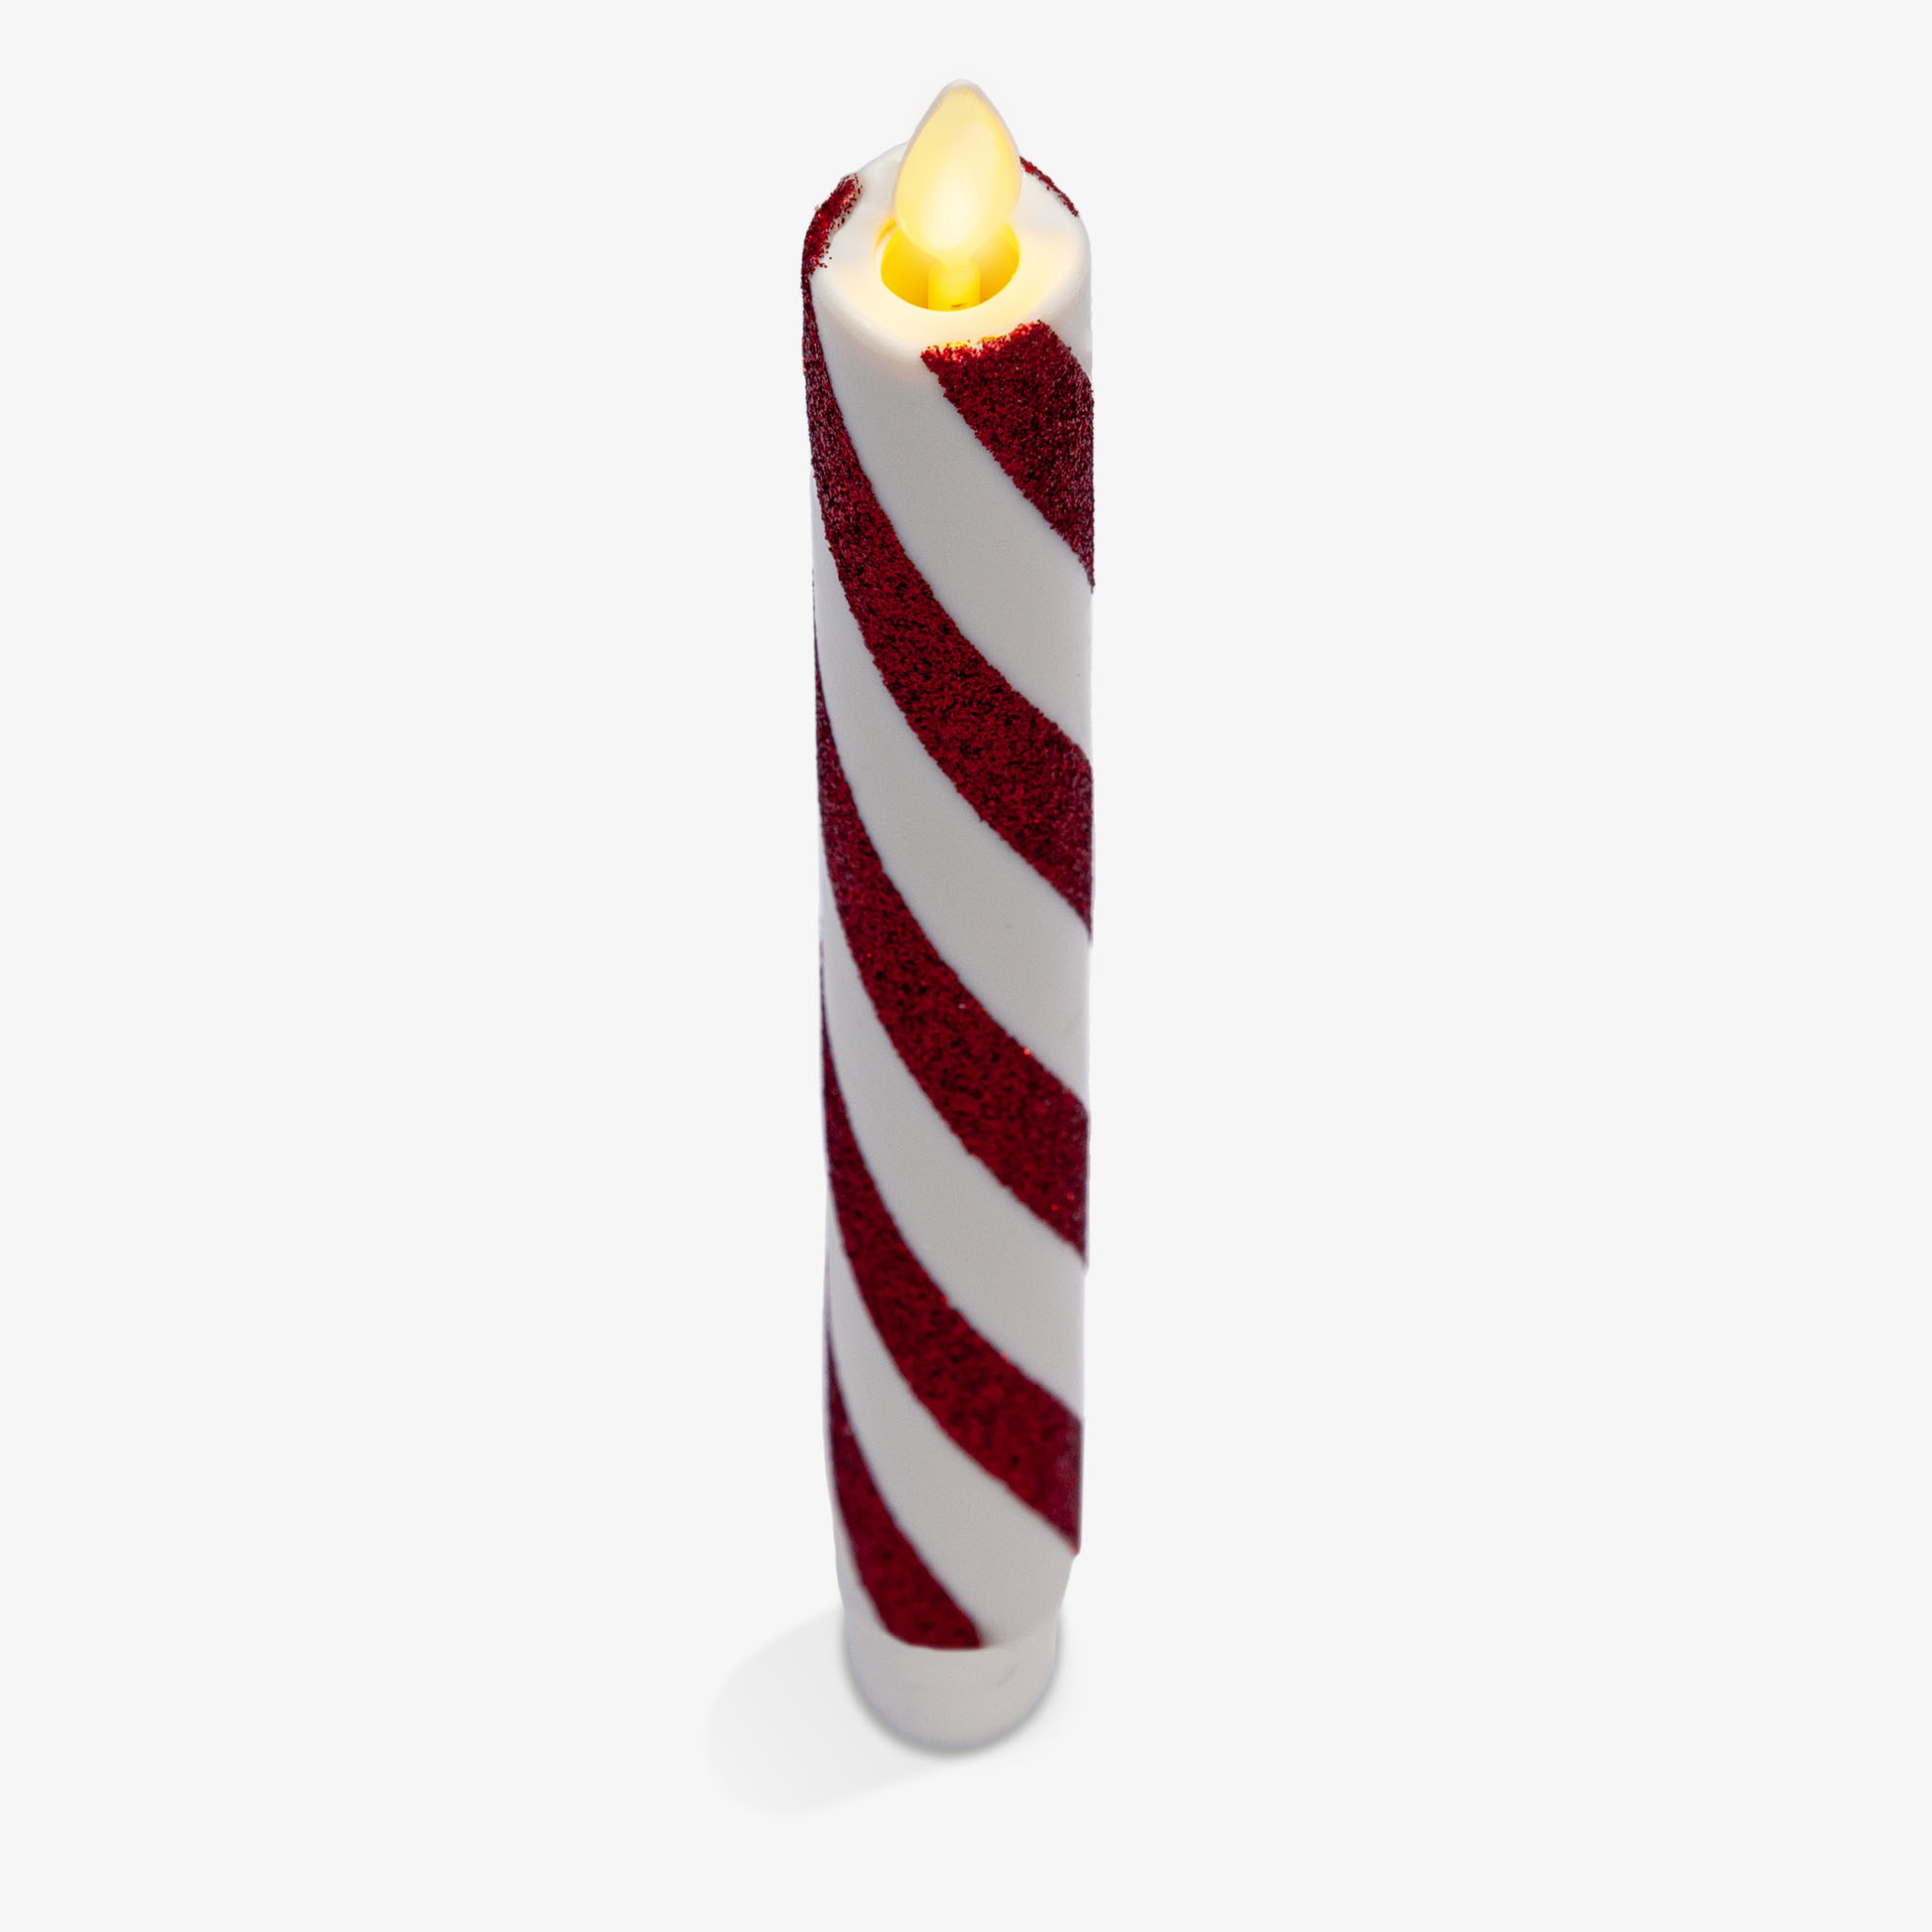 an image of Luminara's candy cane flameless candle